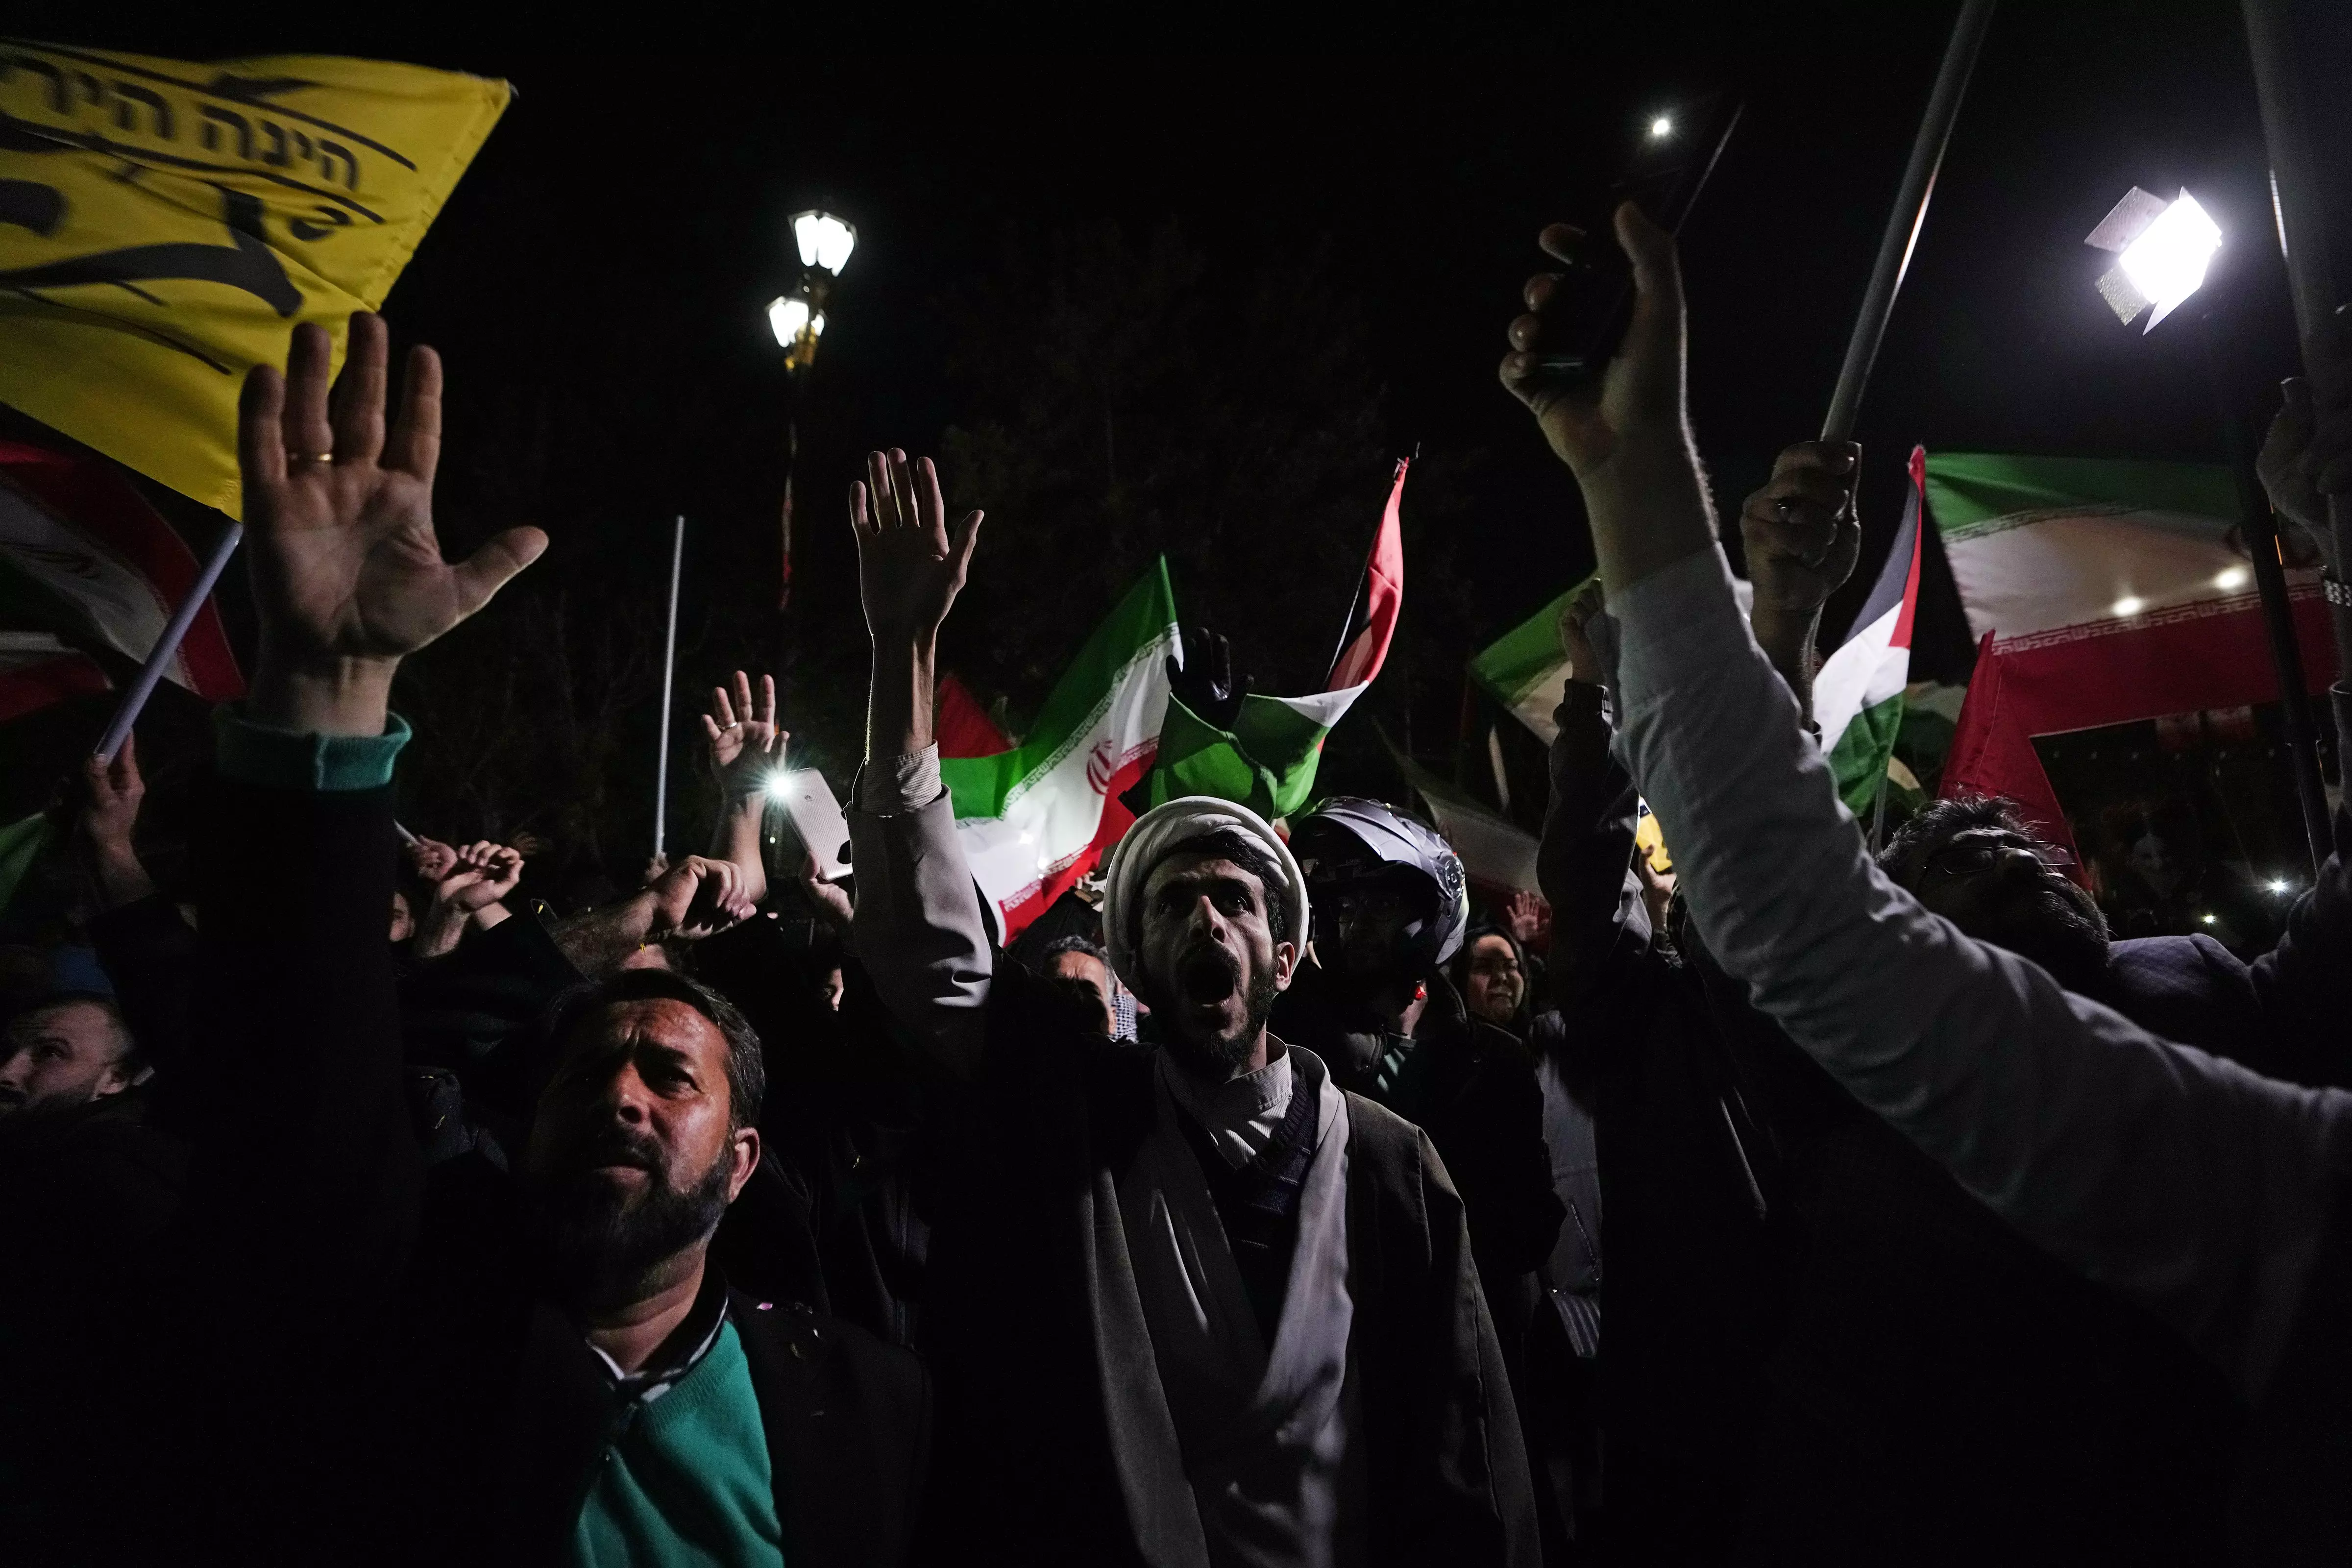 Iran gives a menacing reply as Israel says it will retaliate; world leaders urge restraint